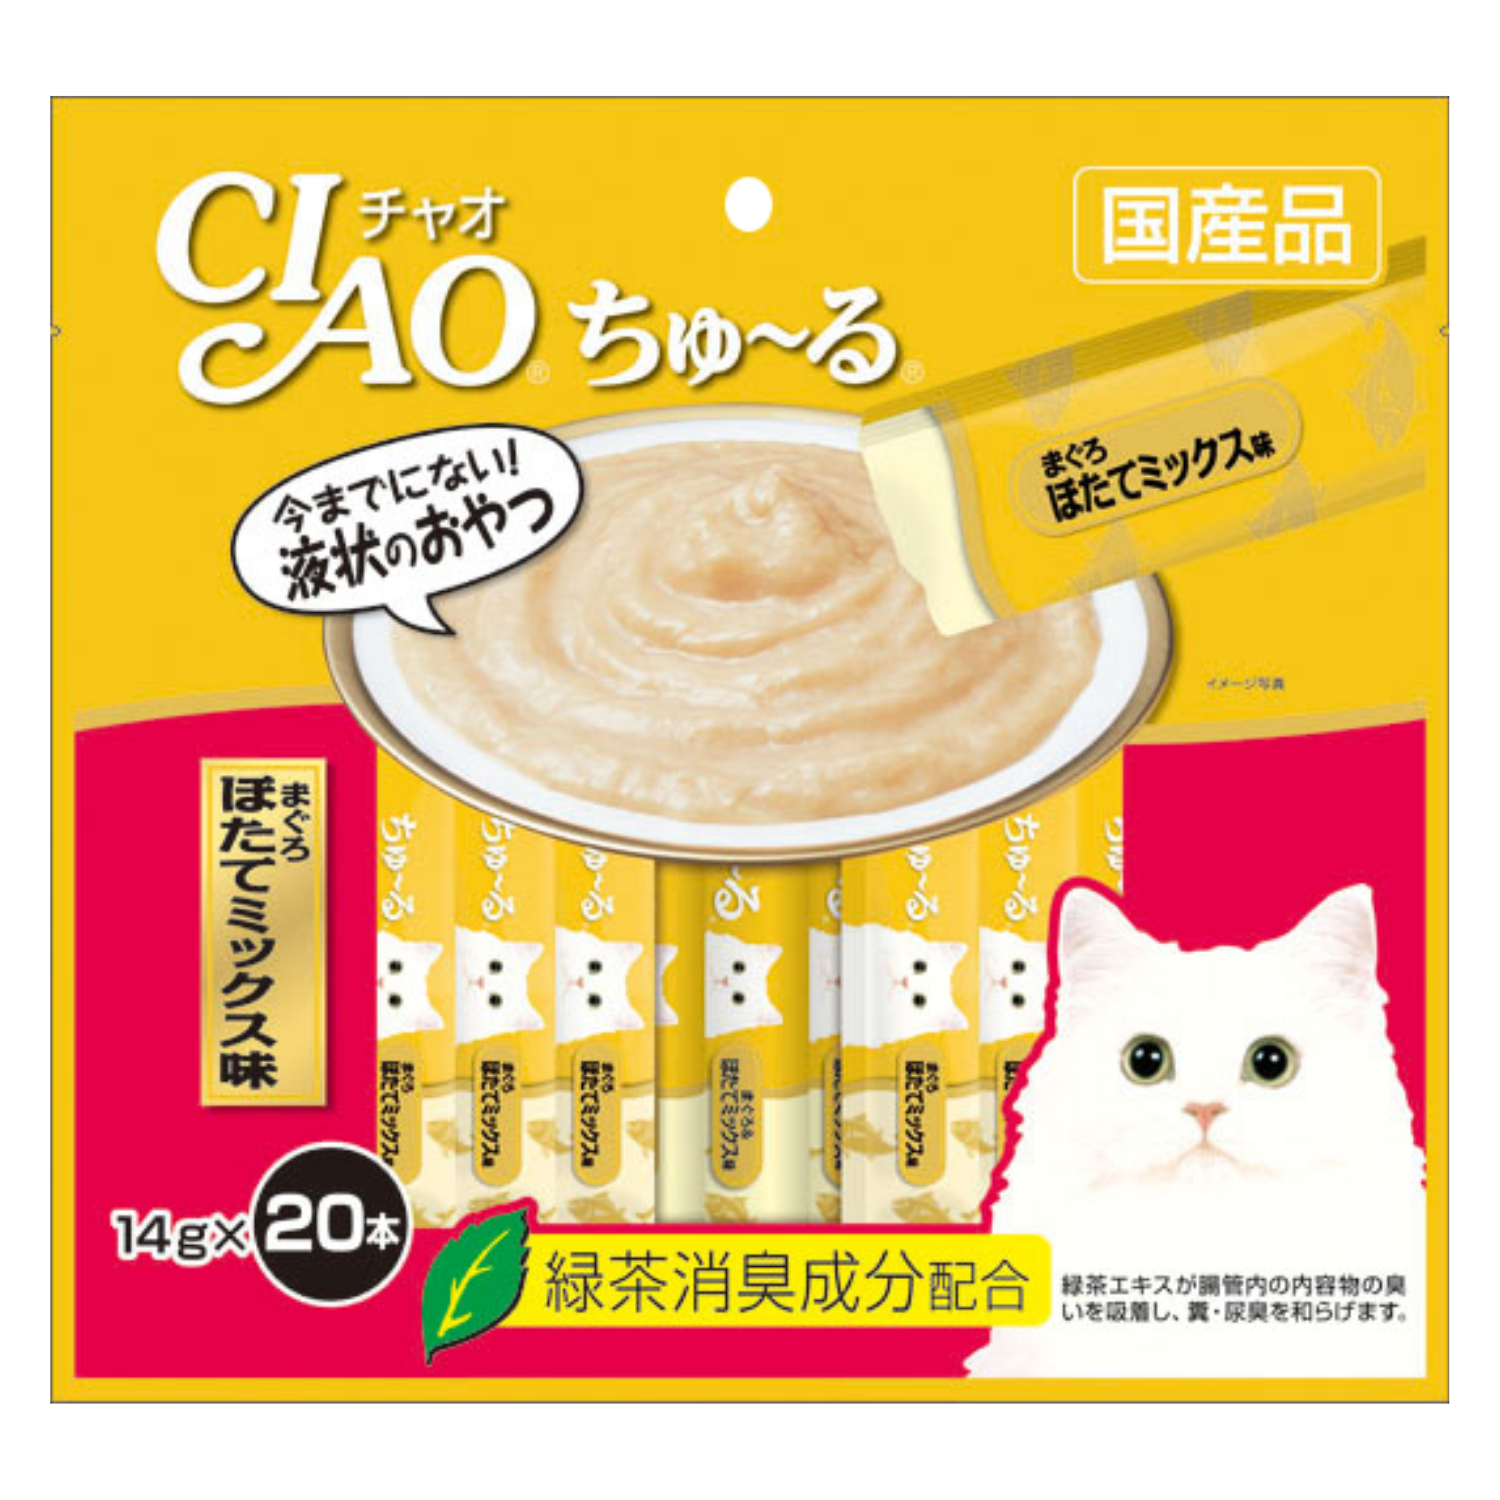 Ciao Churu Pack of 20 Tuna Scallop Mix Flavor - 14g x 20